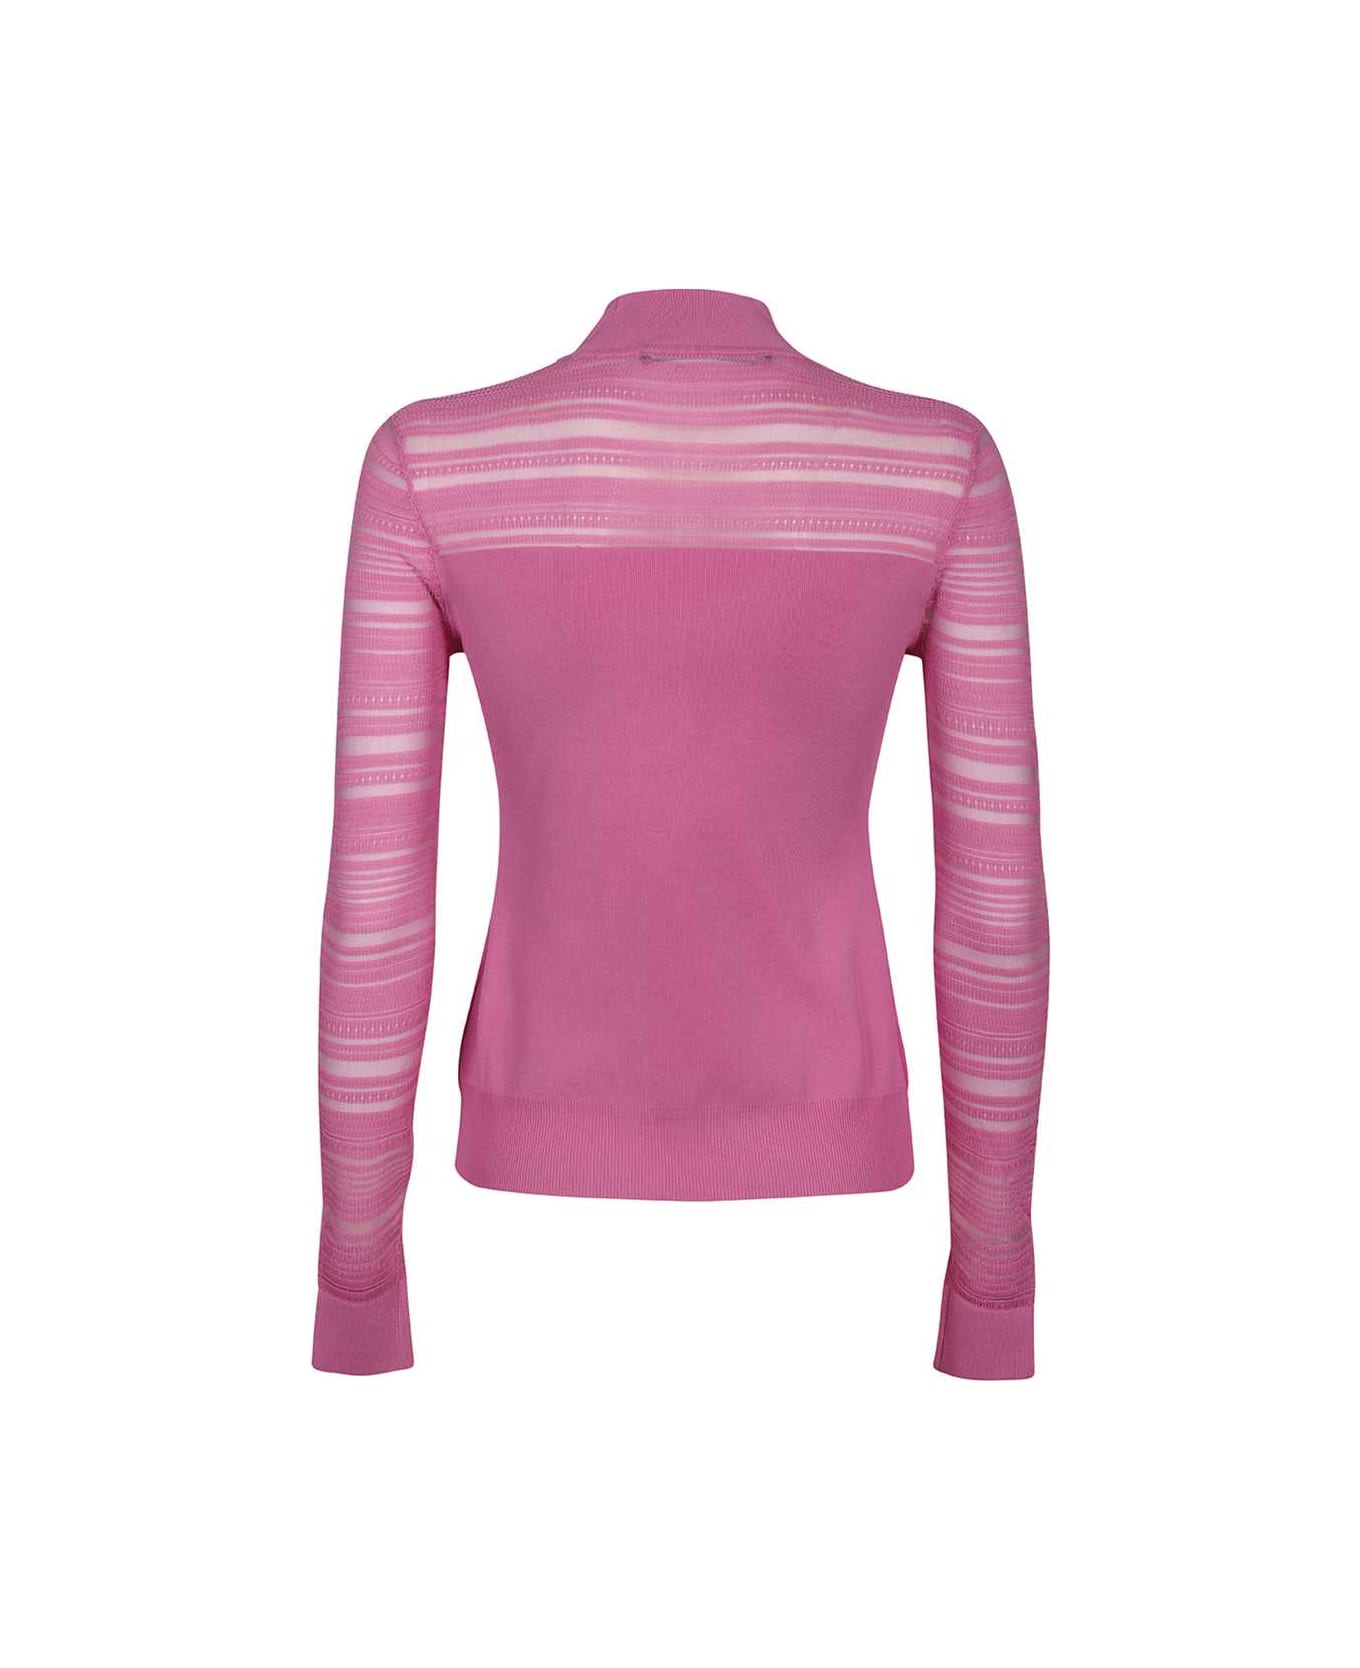 Karl Lagerfeld Turtleneck Sweater - Pink